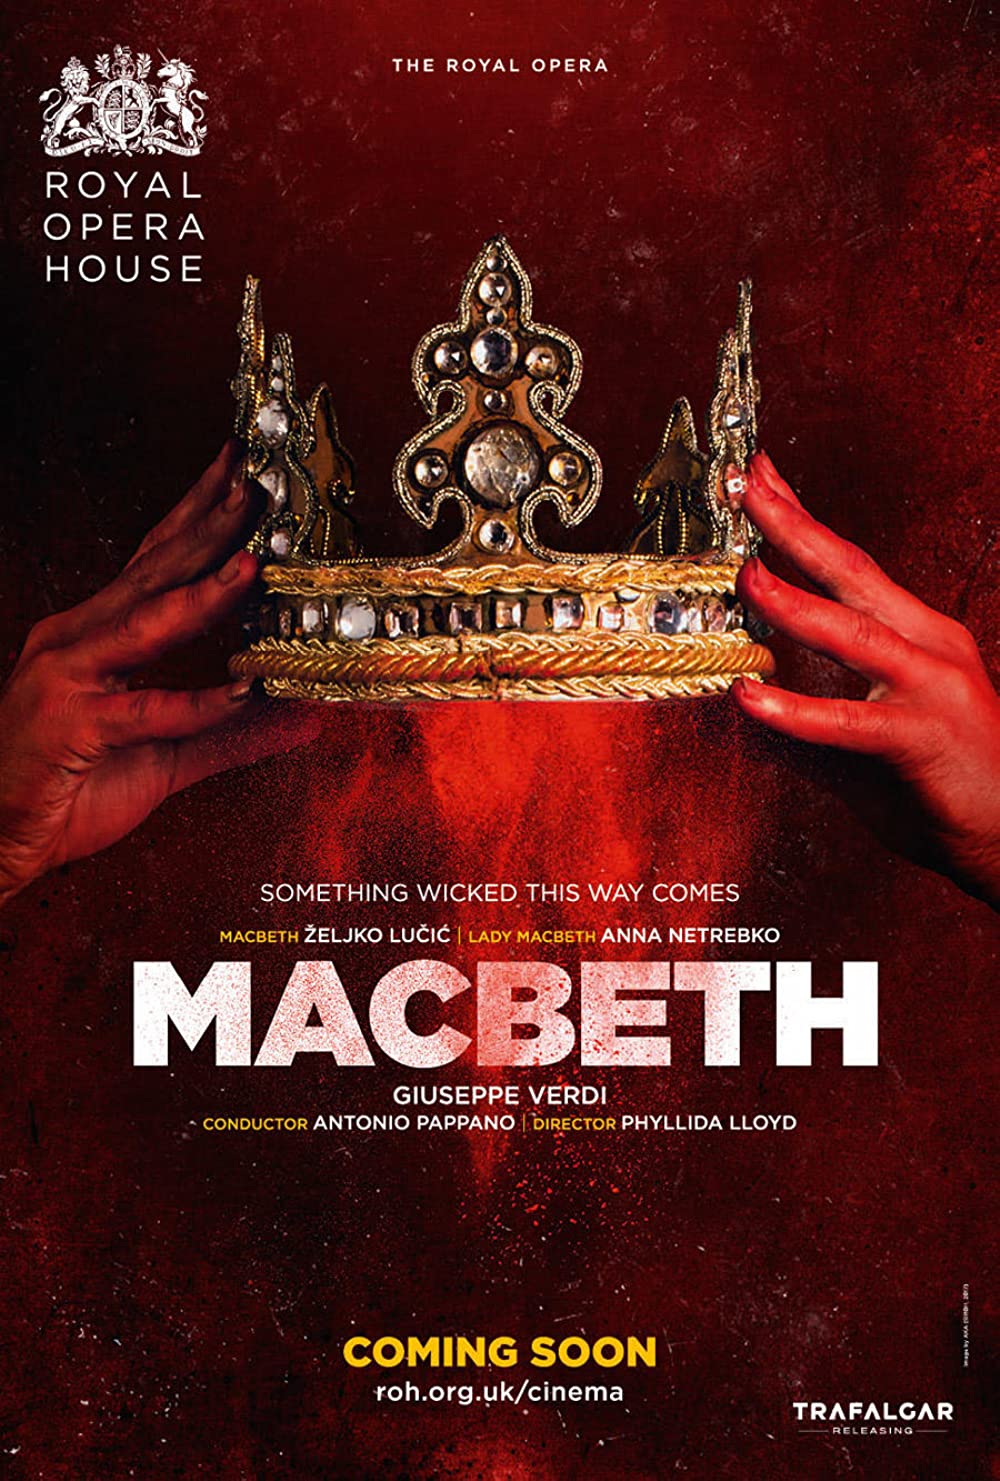 Filmbeschreibung zu Royal Opera House London: Macbeth